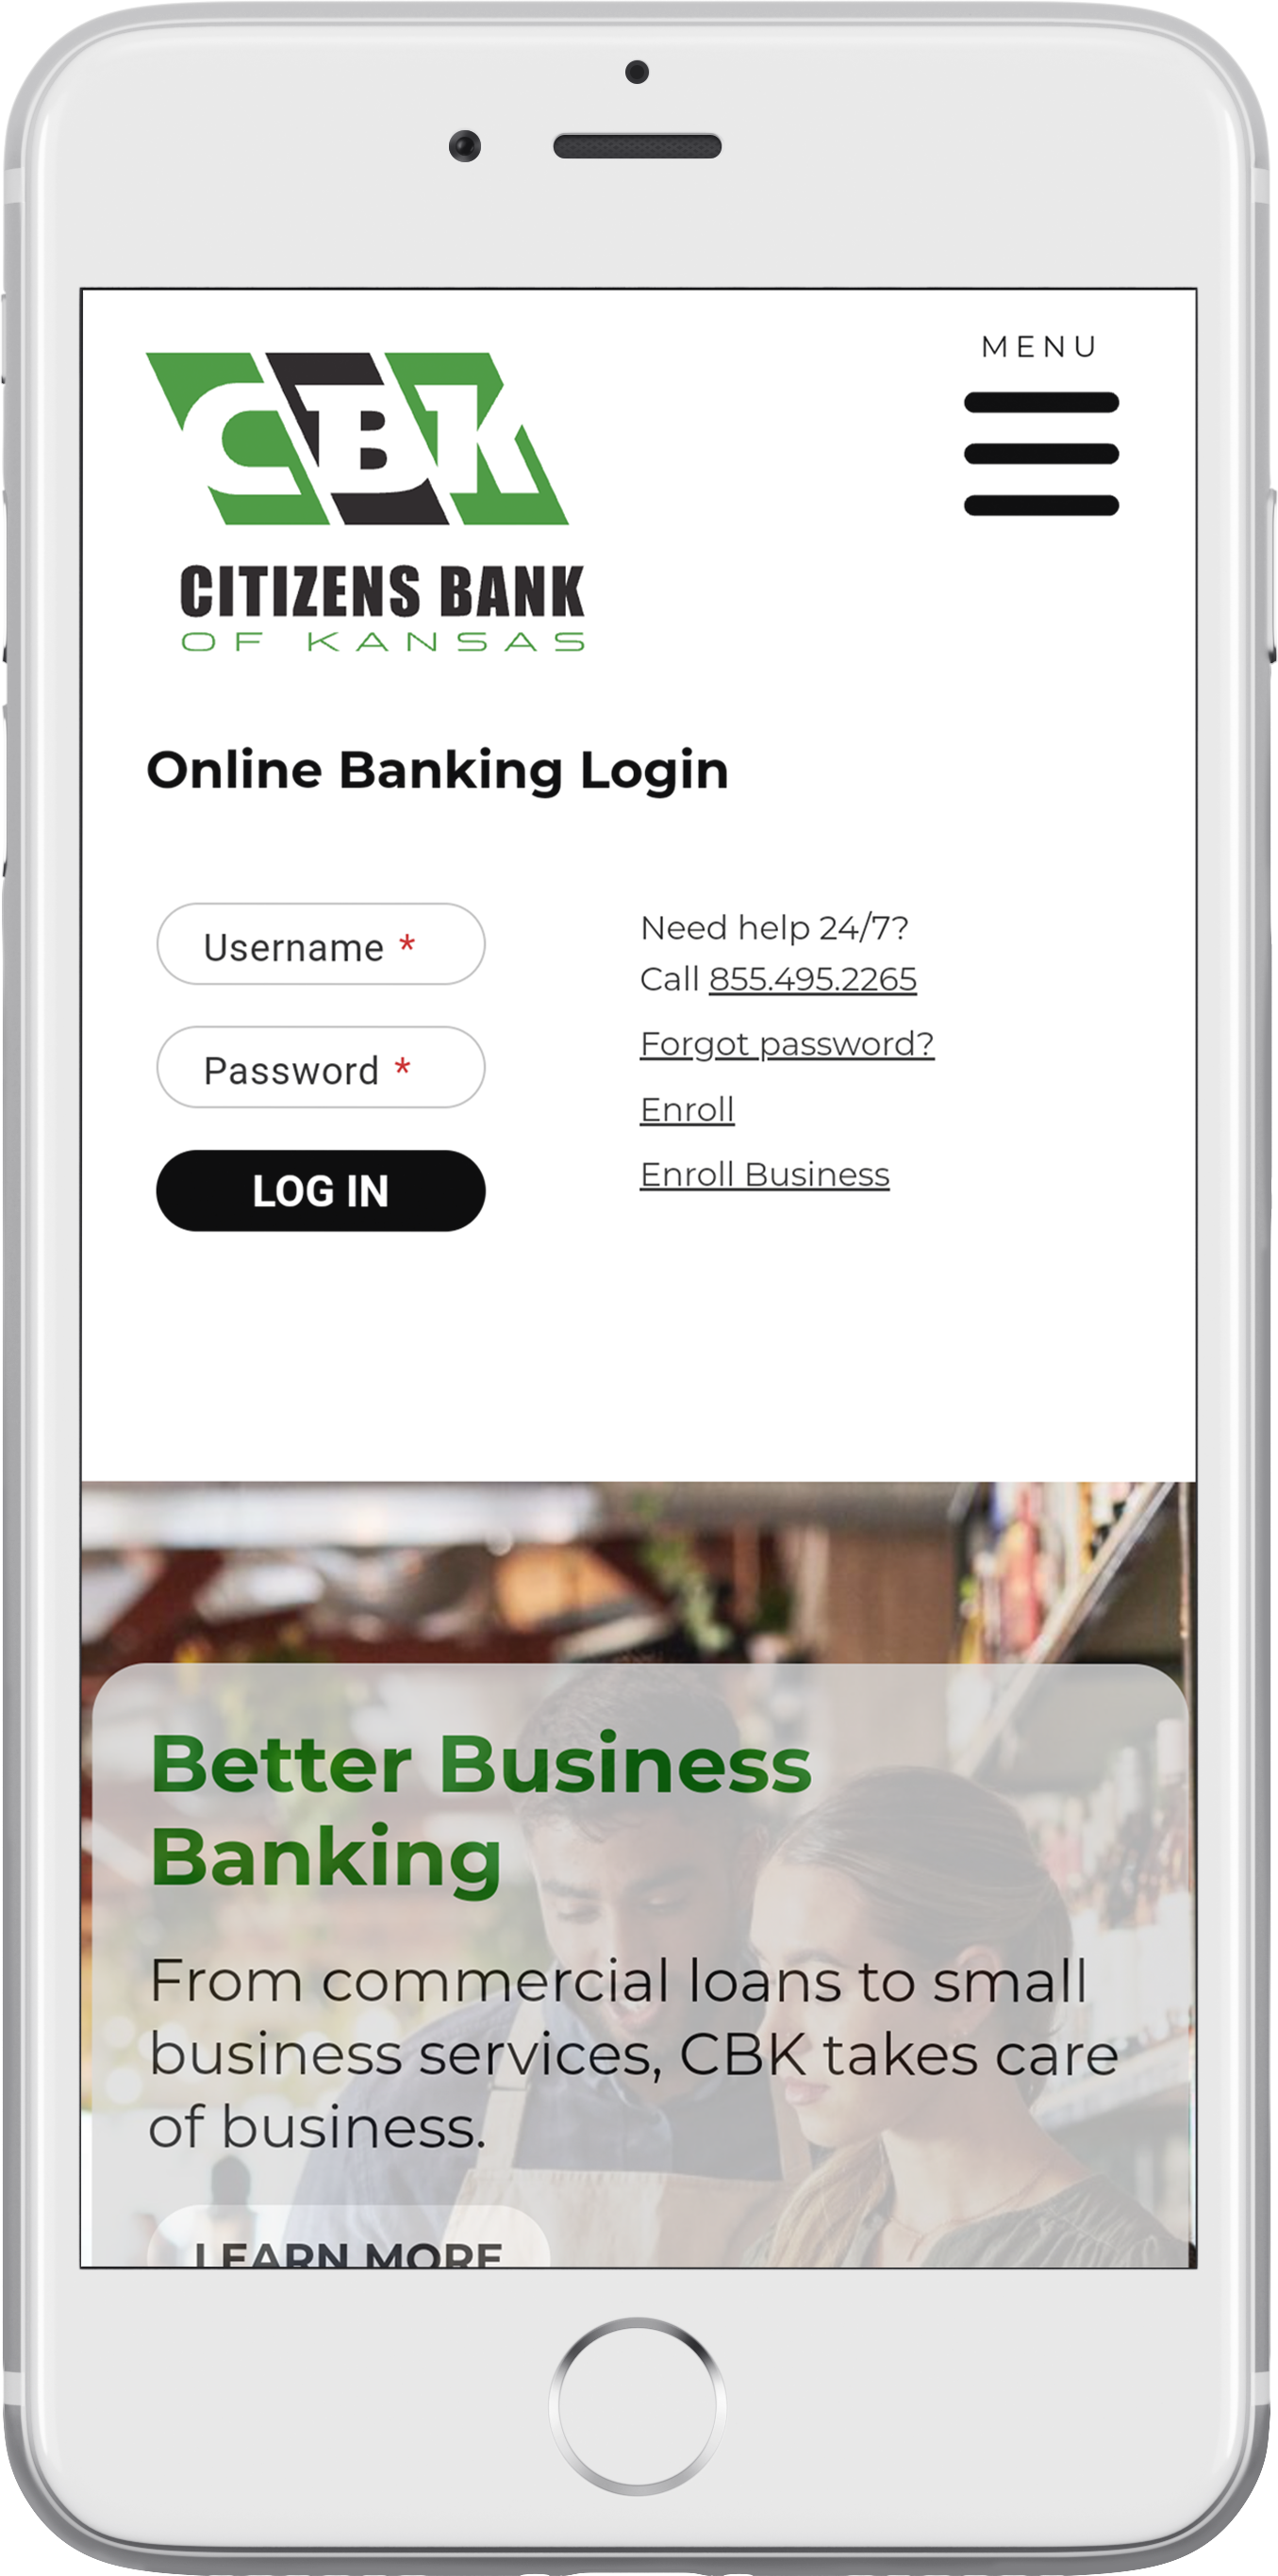 Citizens Bank of Kansas’ responsive bank website on a smartphone